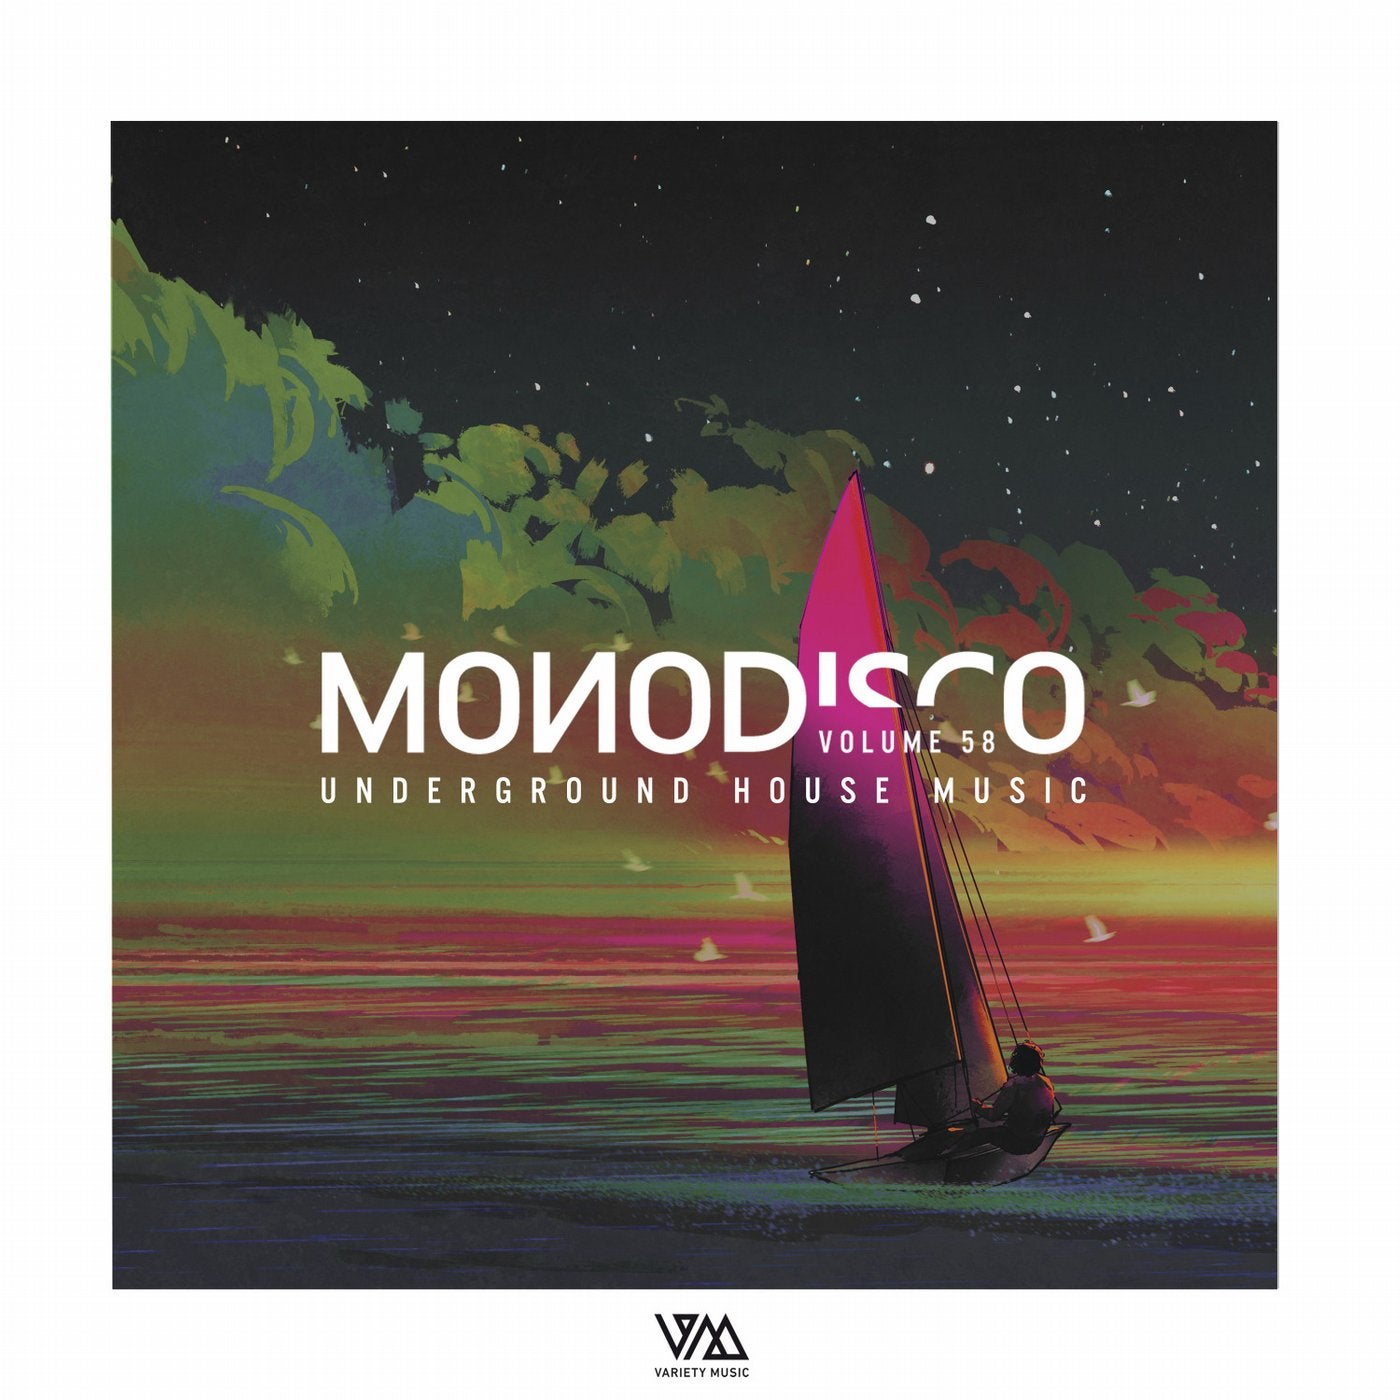 Monodisco Vol. 58